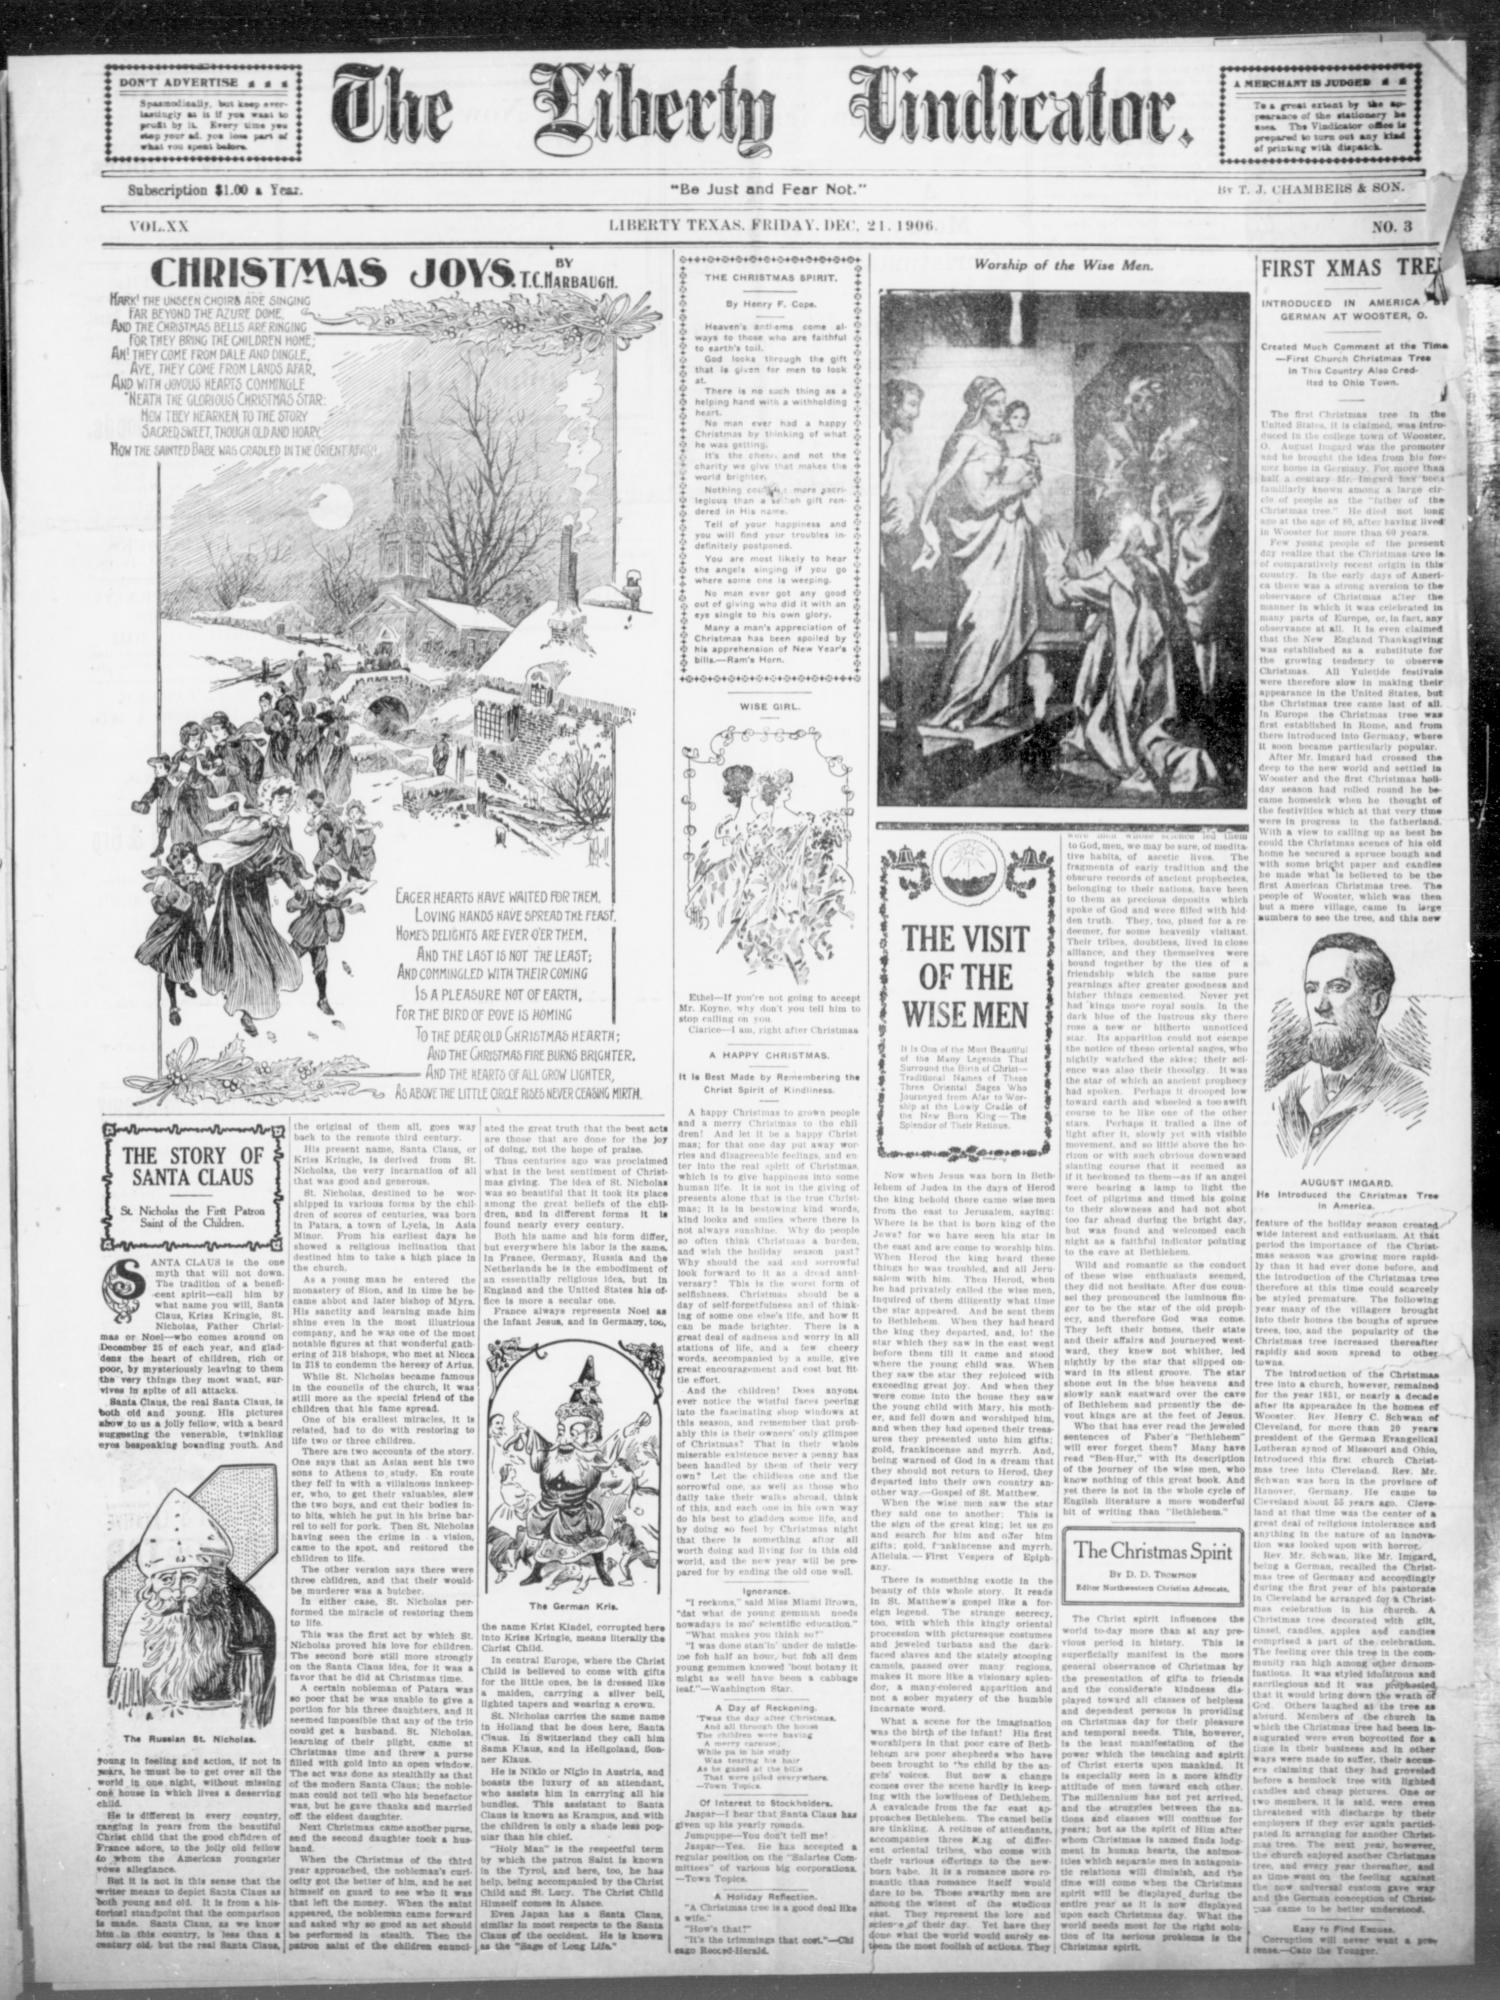 Liberty Newsprint Jan-25-10 by Liberty Newspost - Issuu